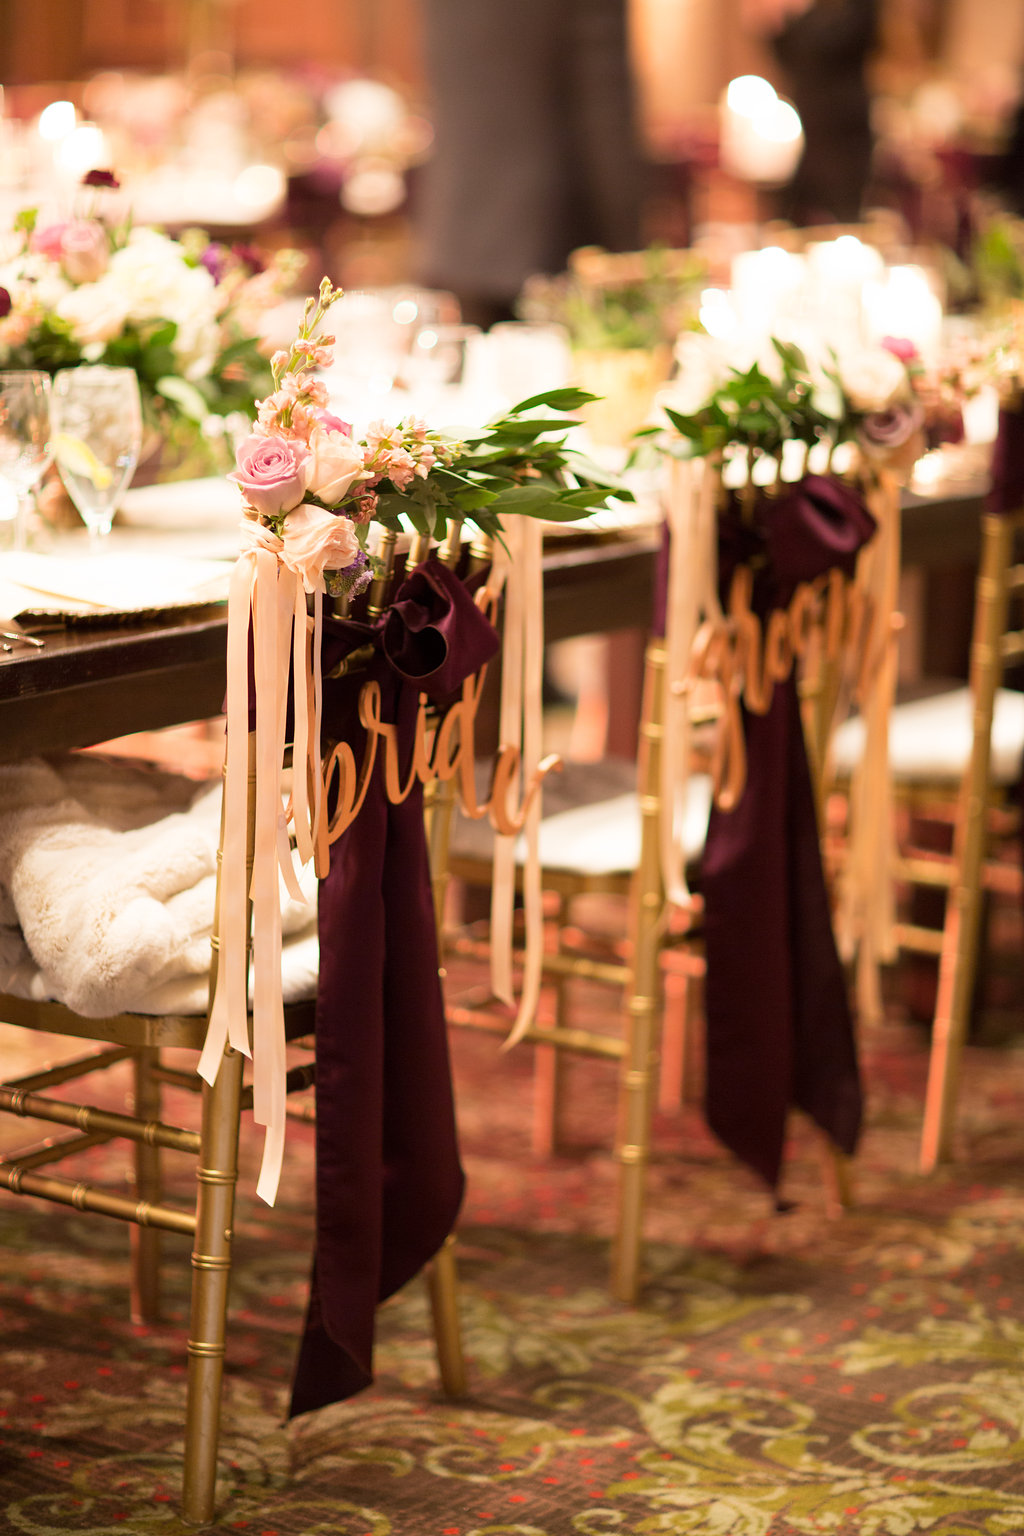 Stein Eriksen Lodge Wedding | Michelle Leo Events | Utah Wedding Design and Planning | Patricia Lyons Photography